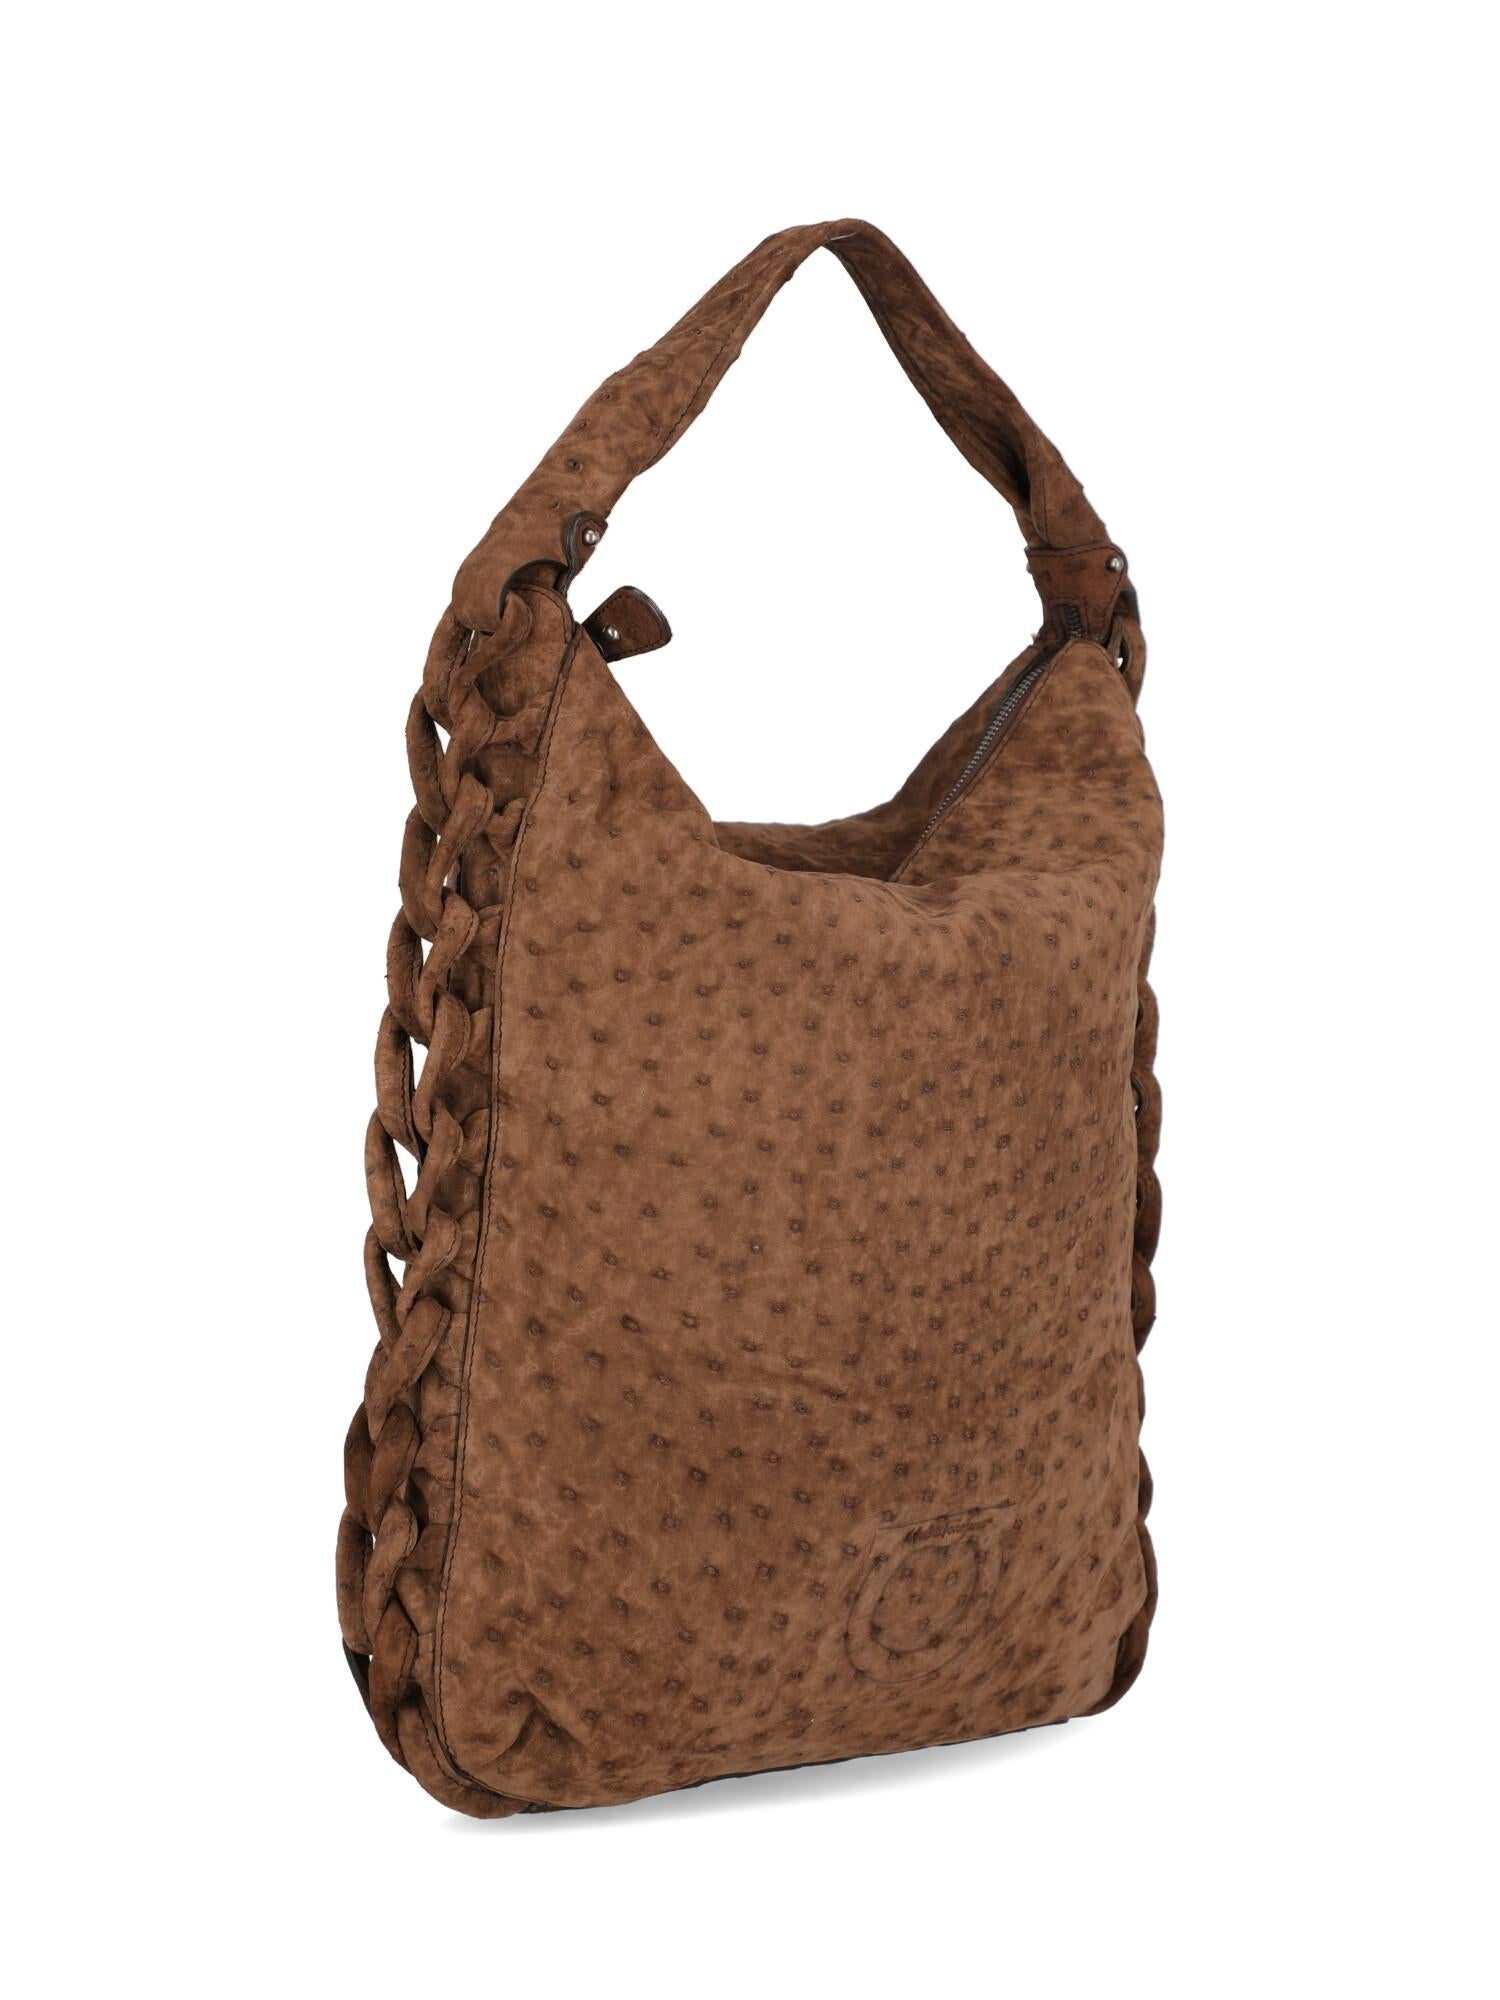 Salvatore Ferragamo Woman Handbag Brown Leather In Good Condition For Sale In Milan, IT